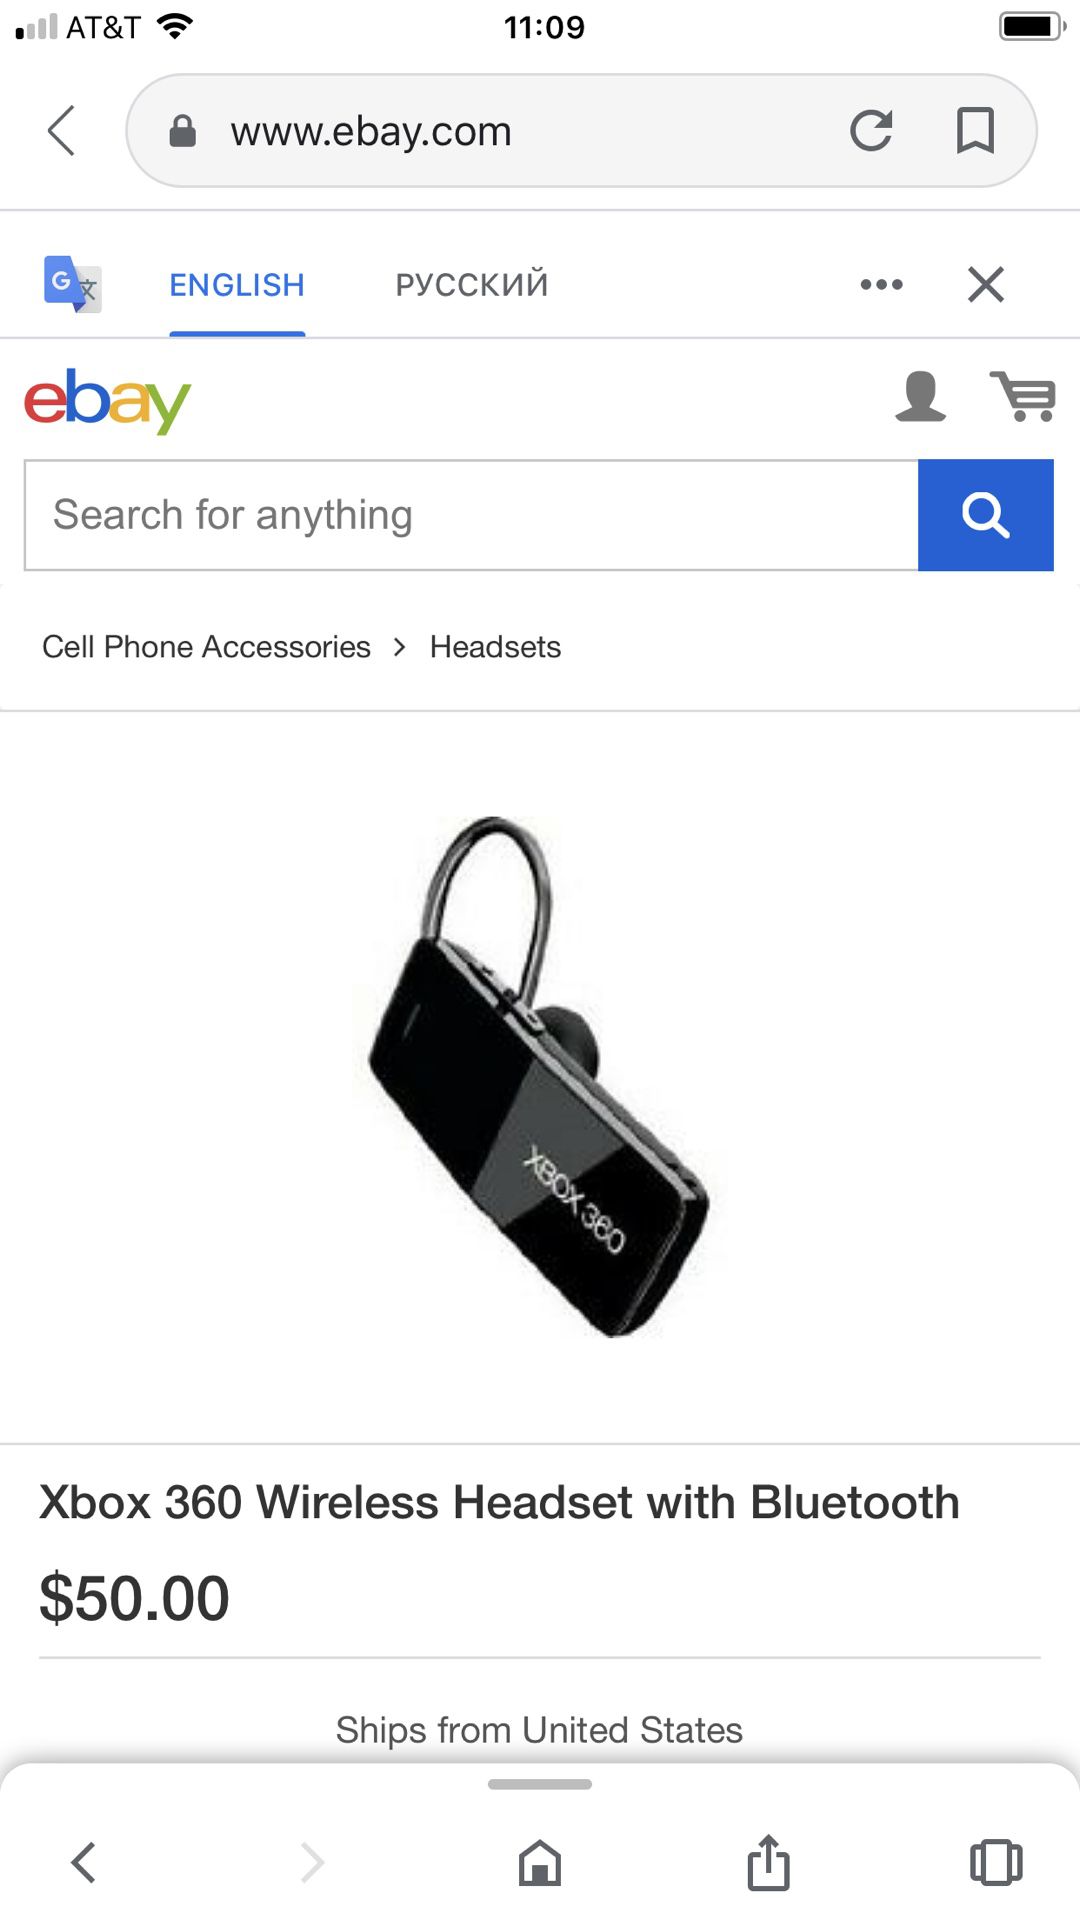 Xbox 360 Wireless Headset with Bluetooth